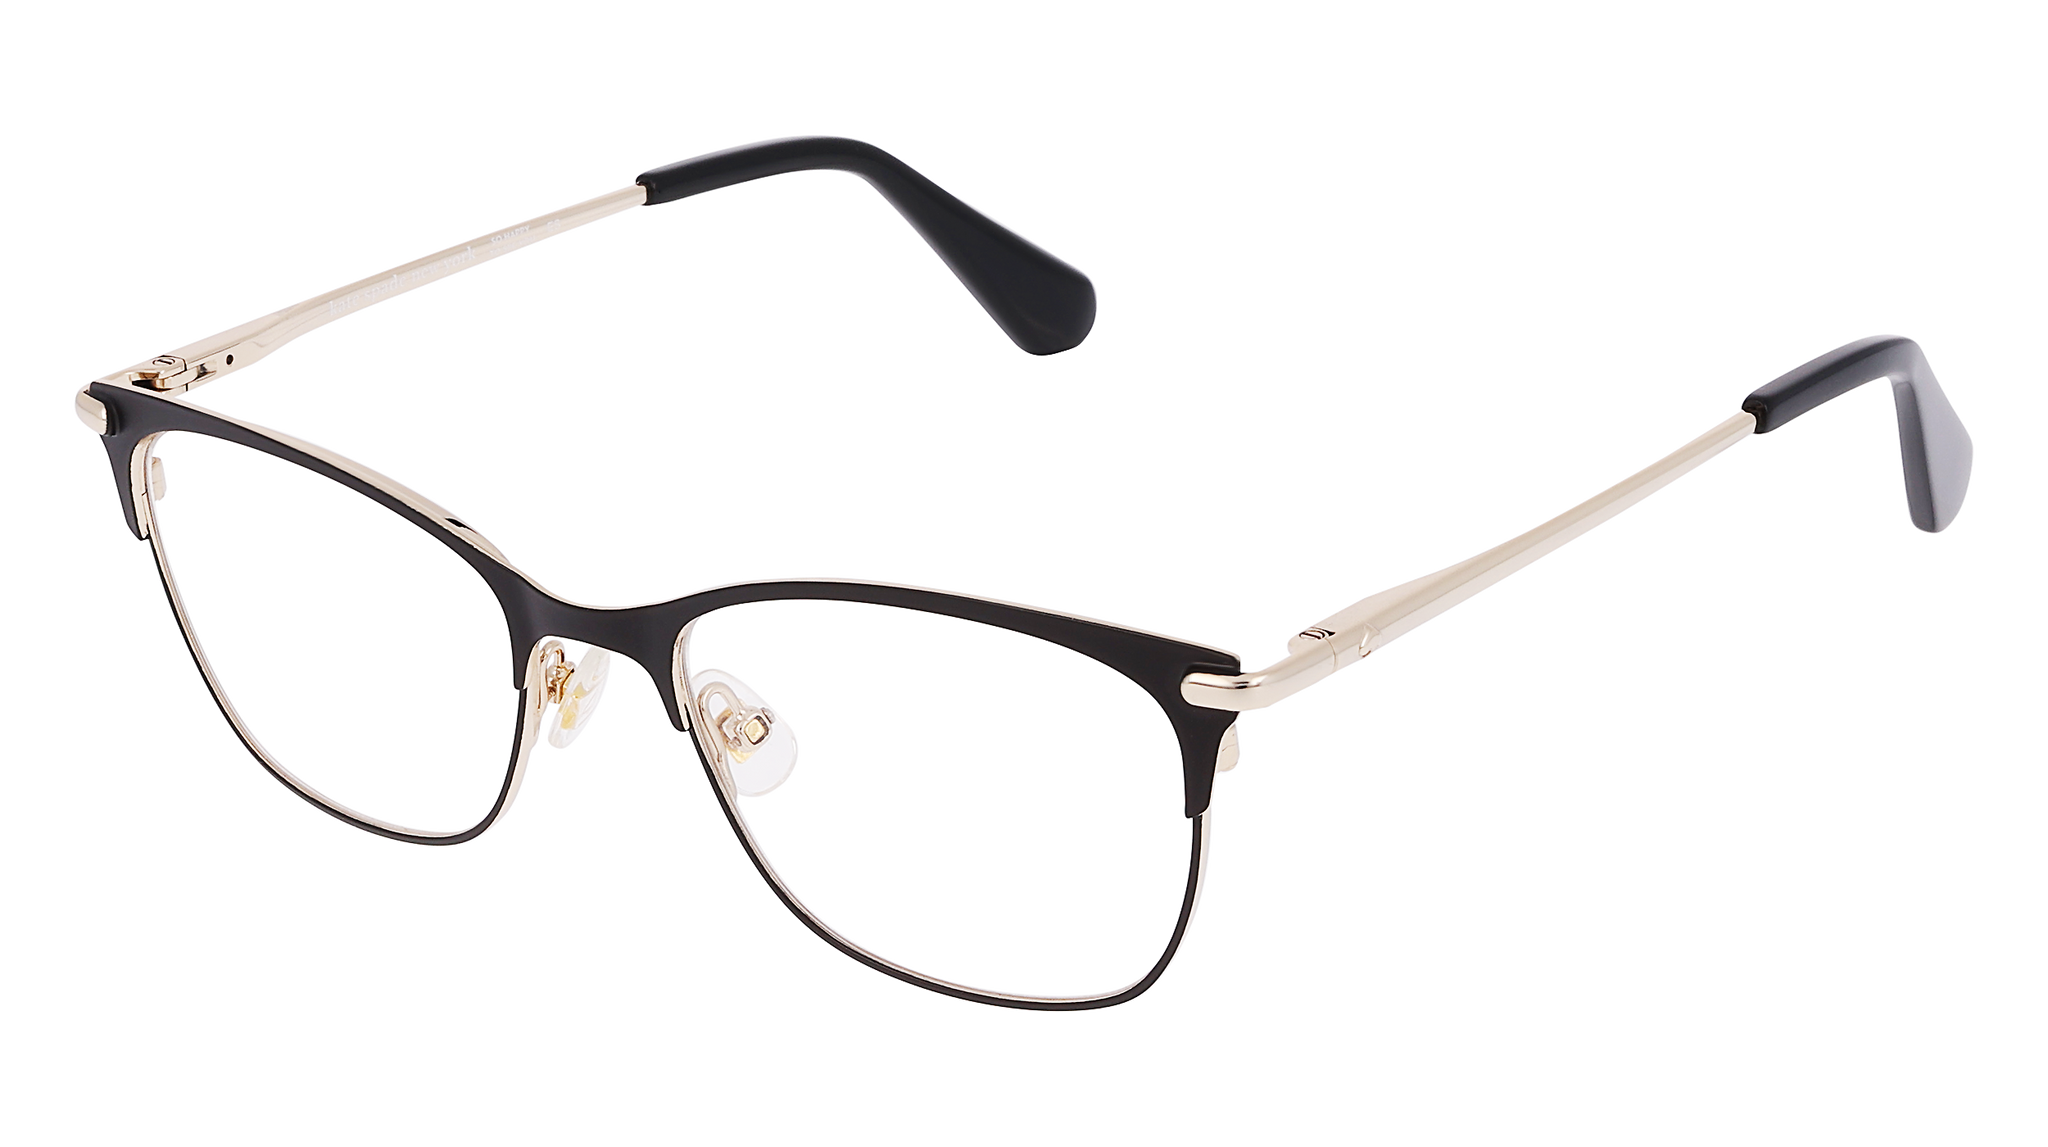 Kate Spade BENDALL 807 Glasses Frames Ausralia | 1001 Optical